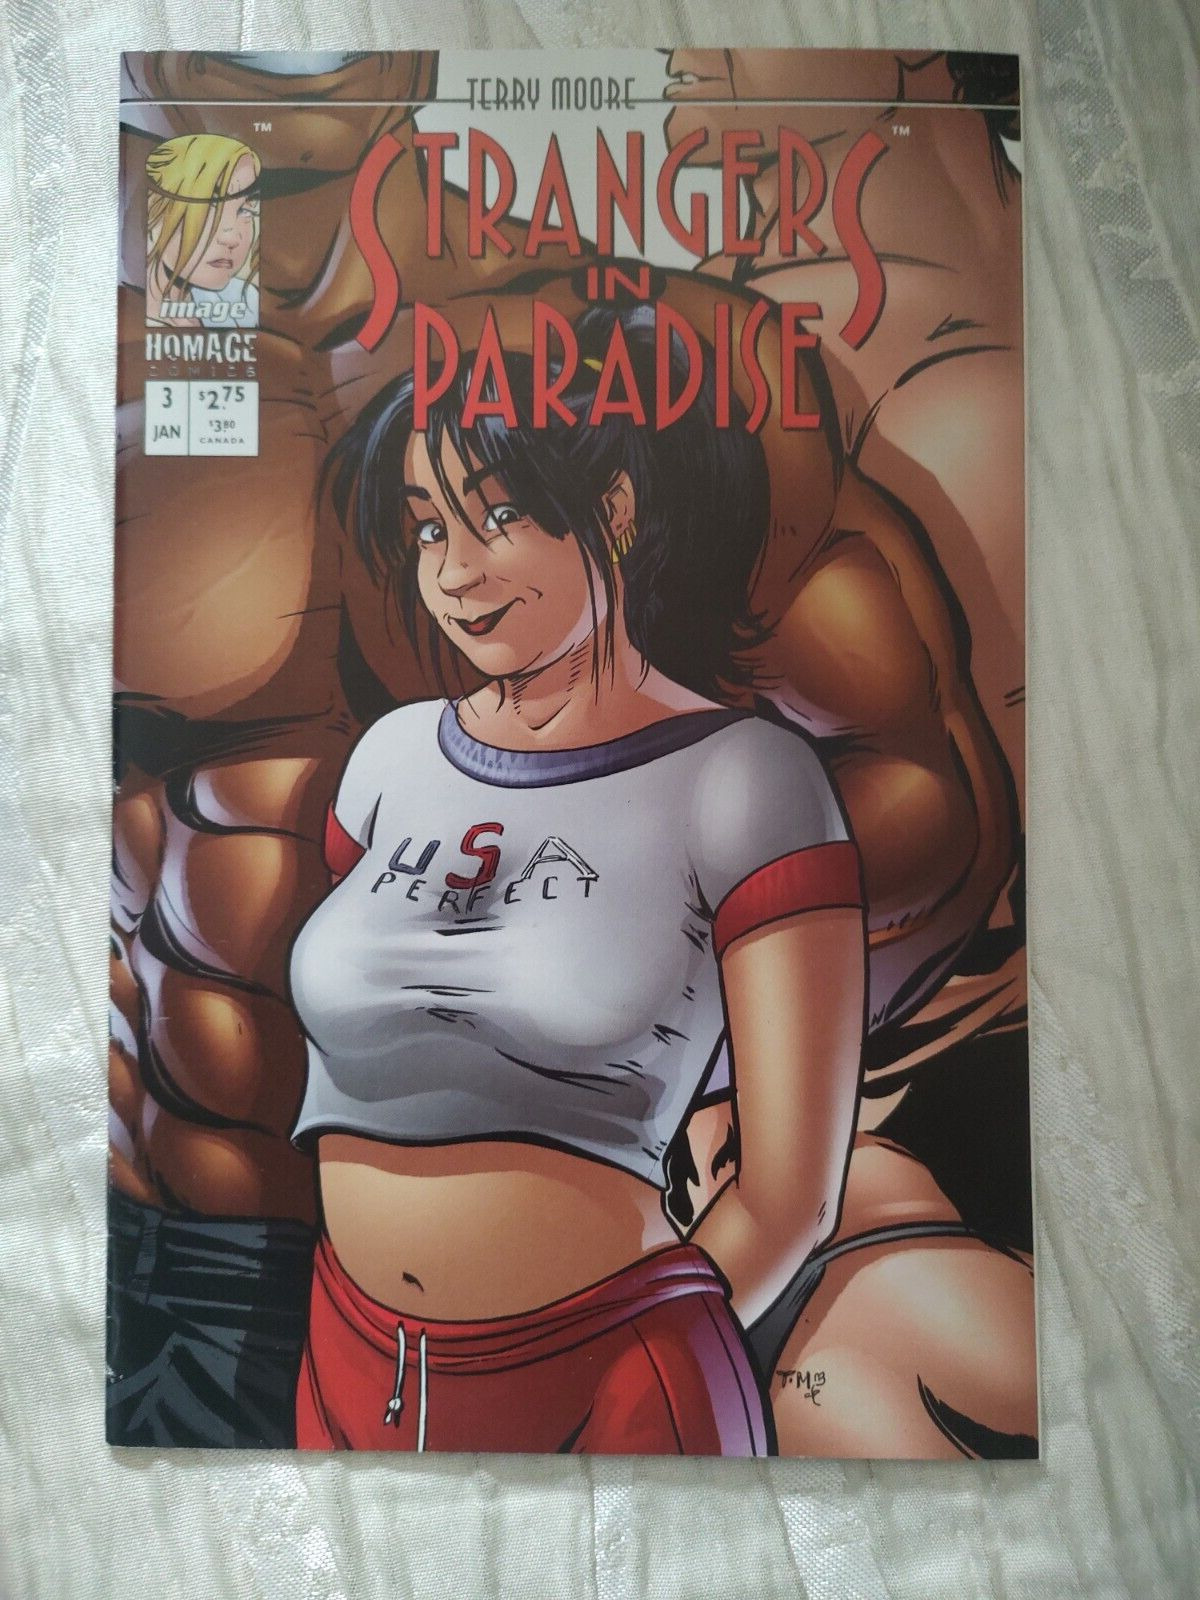 Cb39~comic book~rare strangers in paradise issue #3 Jan